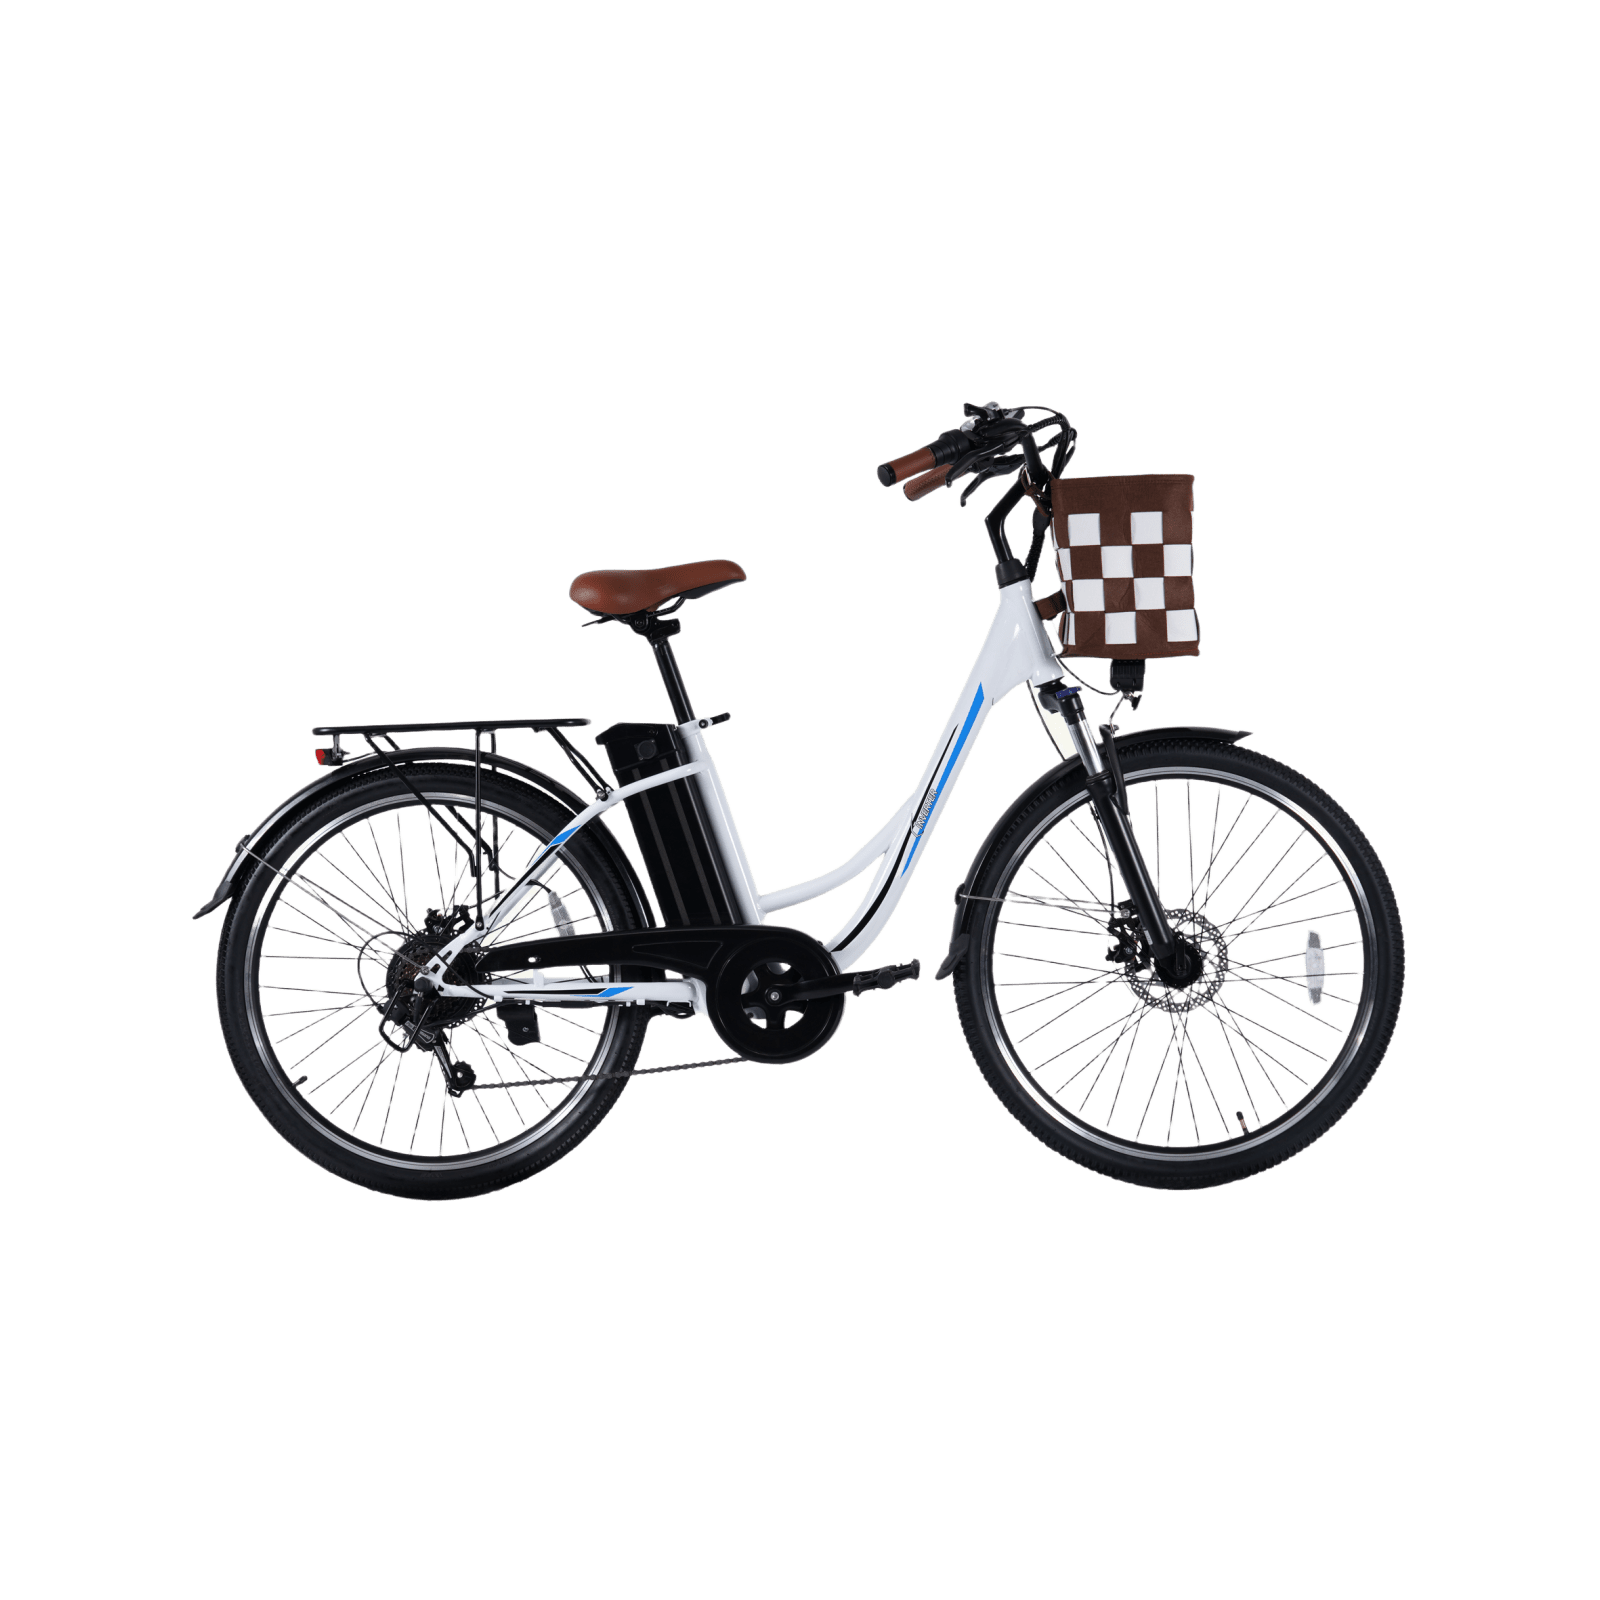 LIBRA Electric Bike 26" Urban commuter e - bikes have a range of 25 miles - C INVERTER Electric bike